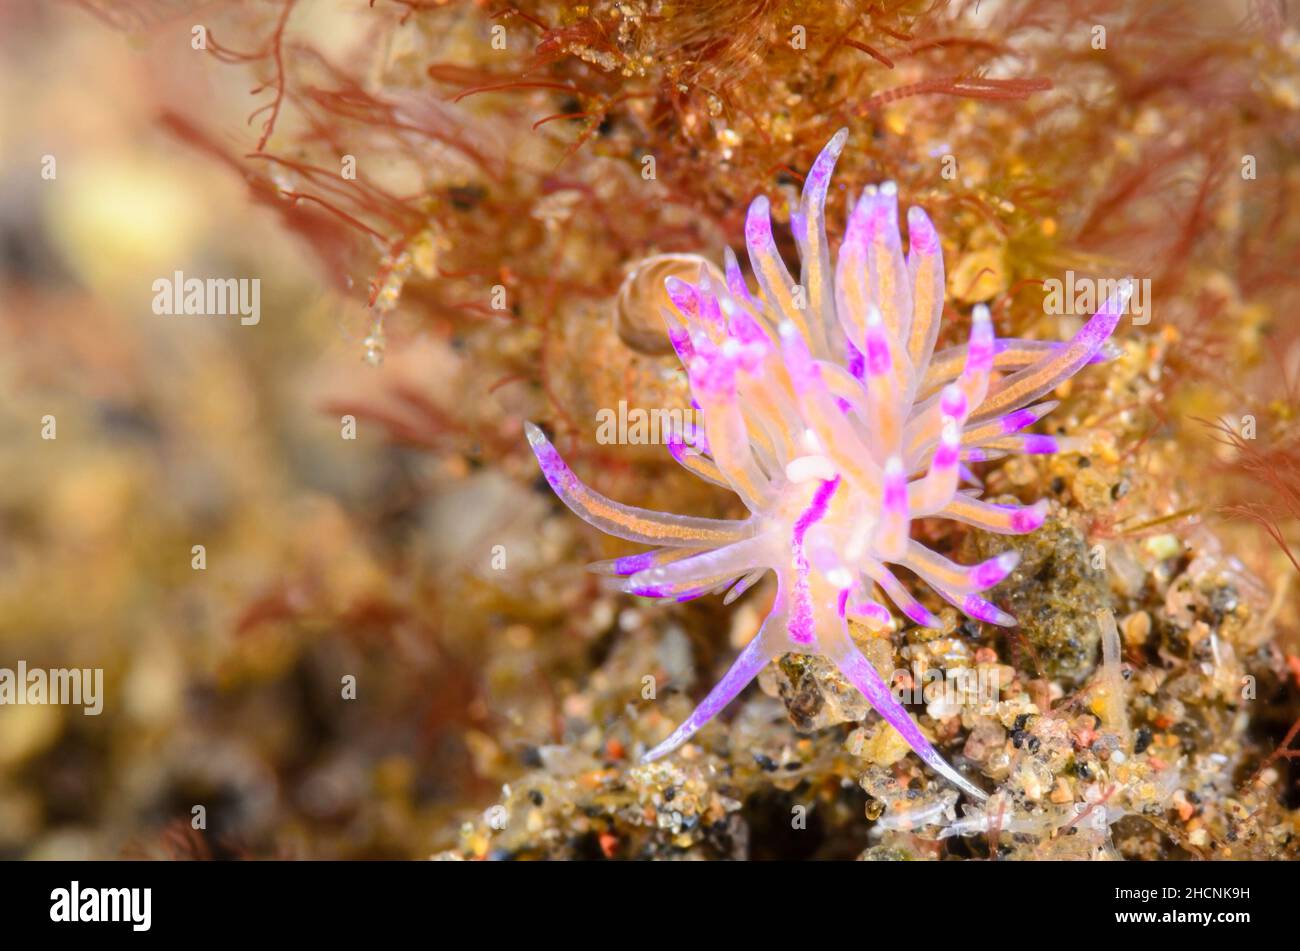 Sea slug or nudibranch, Unidentia sp., Alor, Nusa Tenggara, Indonesia, Pacific Stock Photo